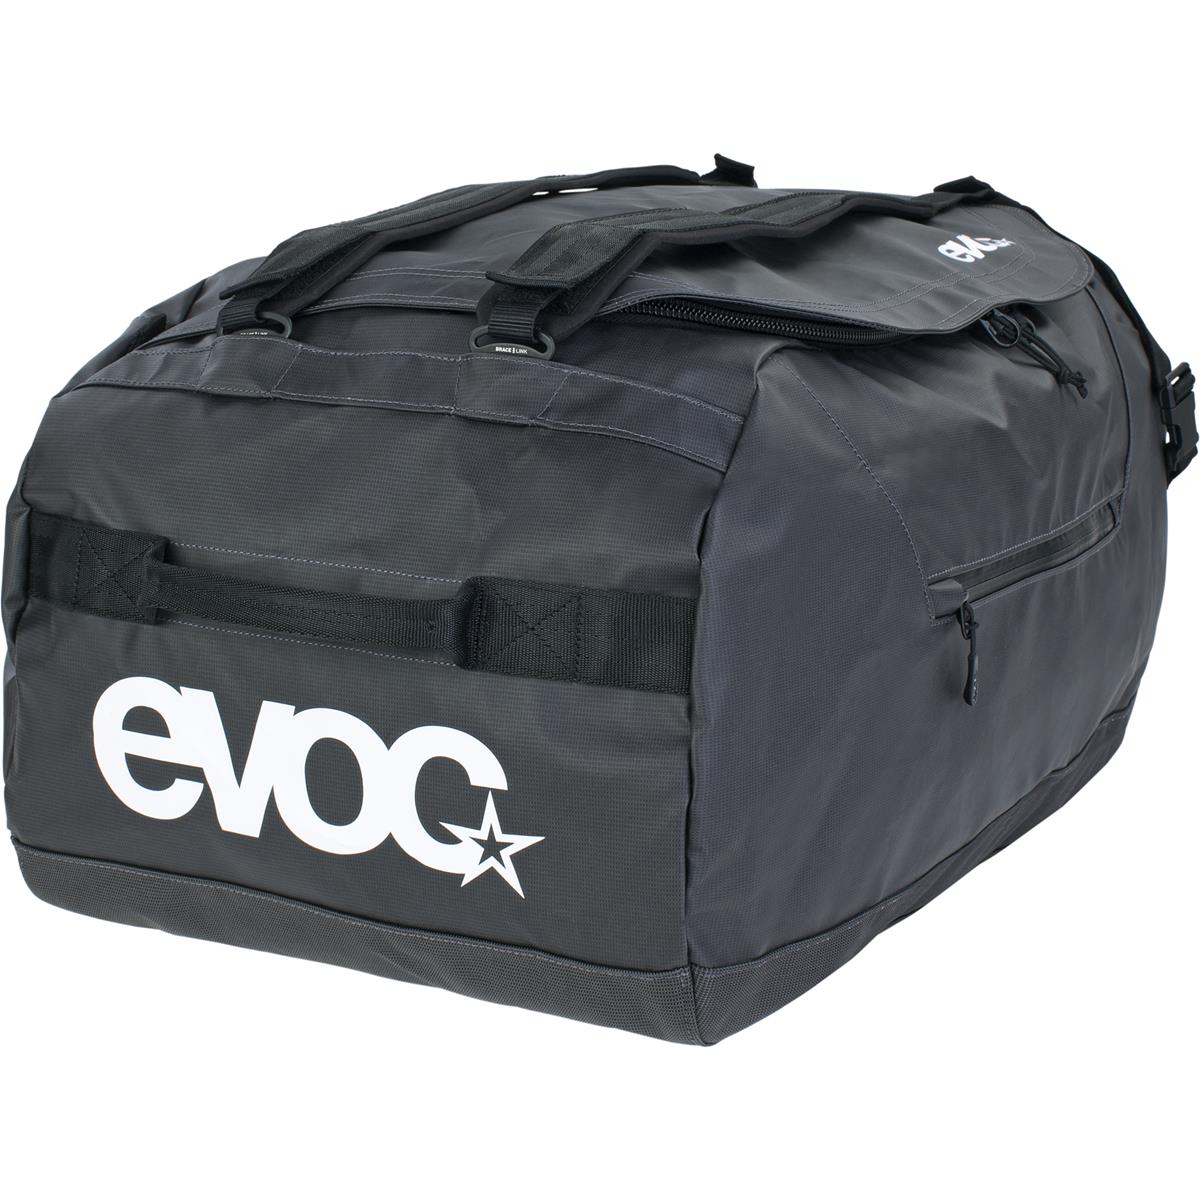 Evoc Duffle Bag Duffle Bag 60 Carbon Gray/Black